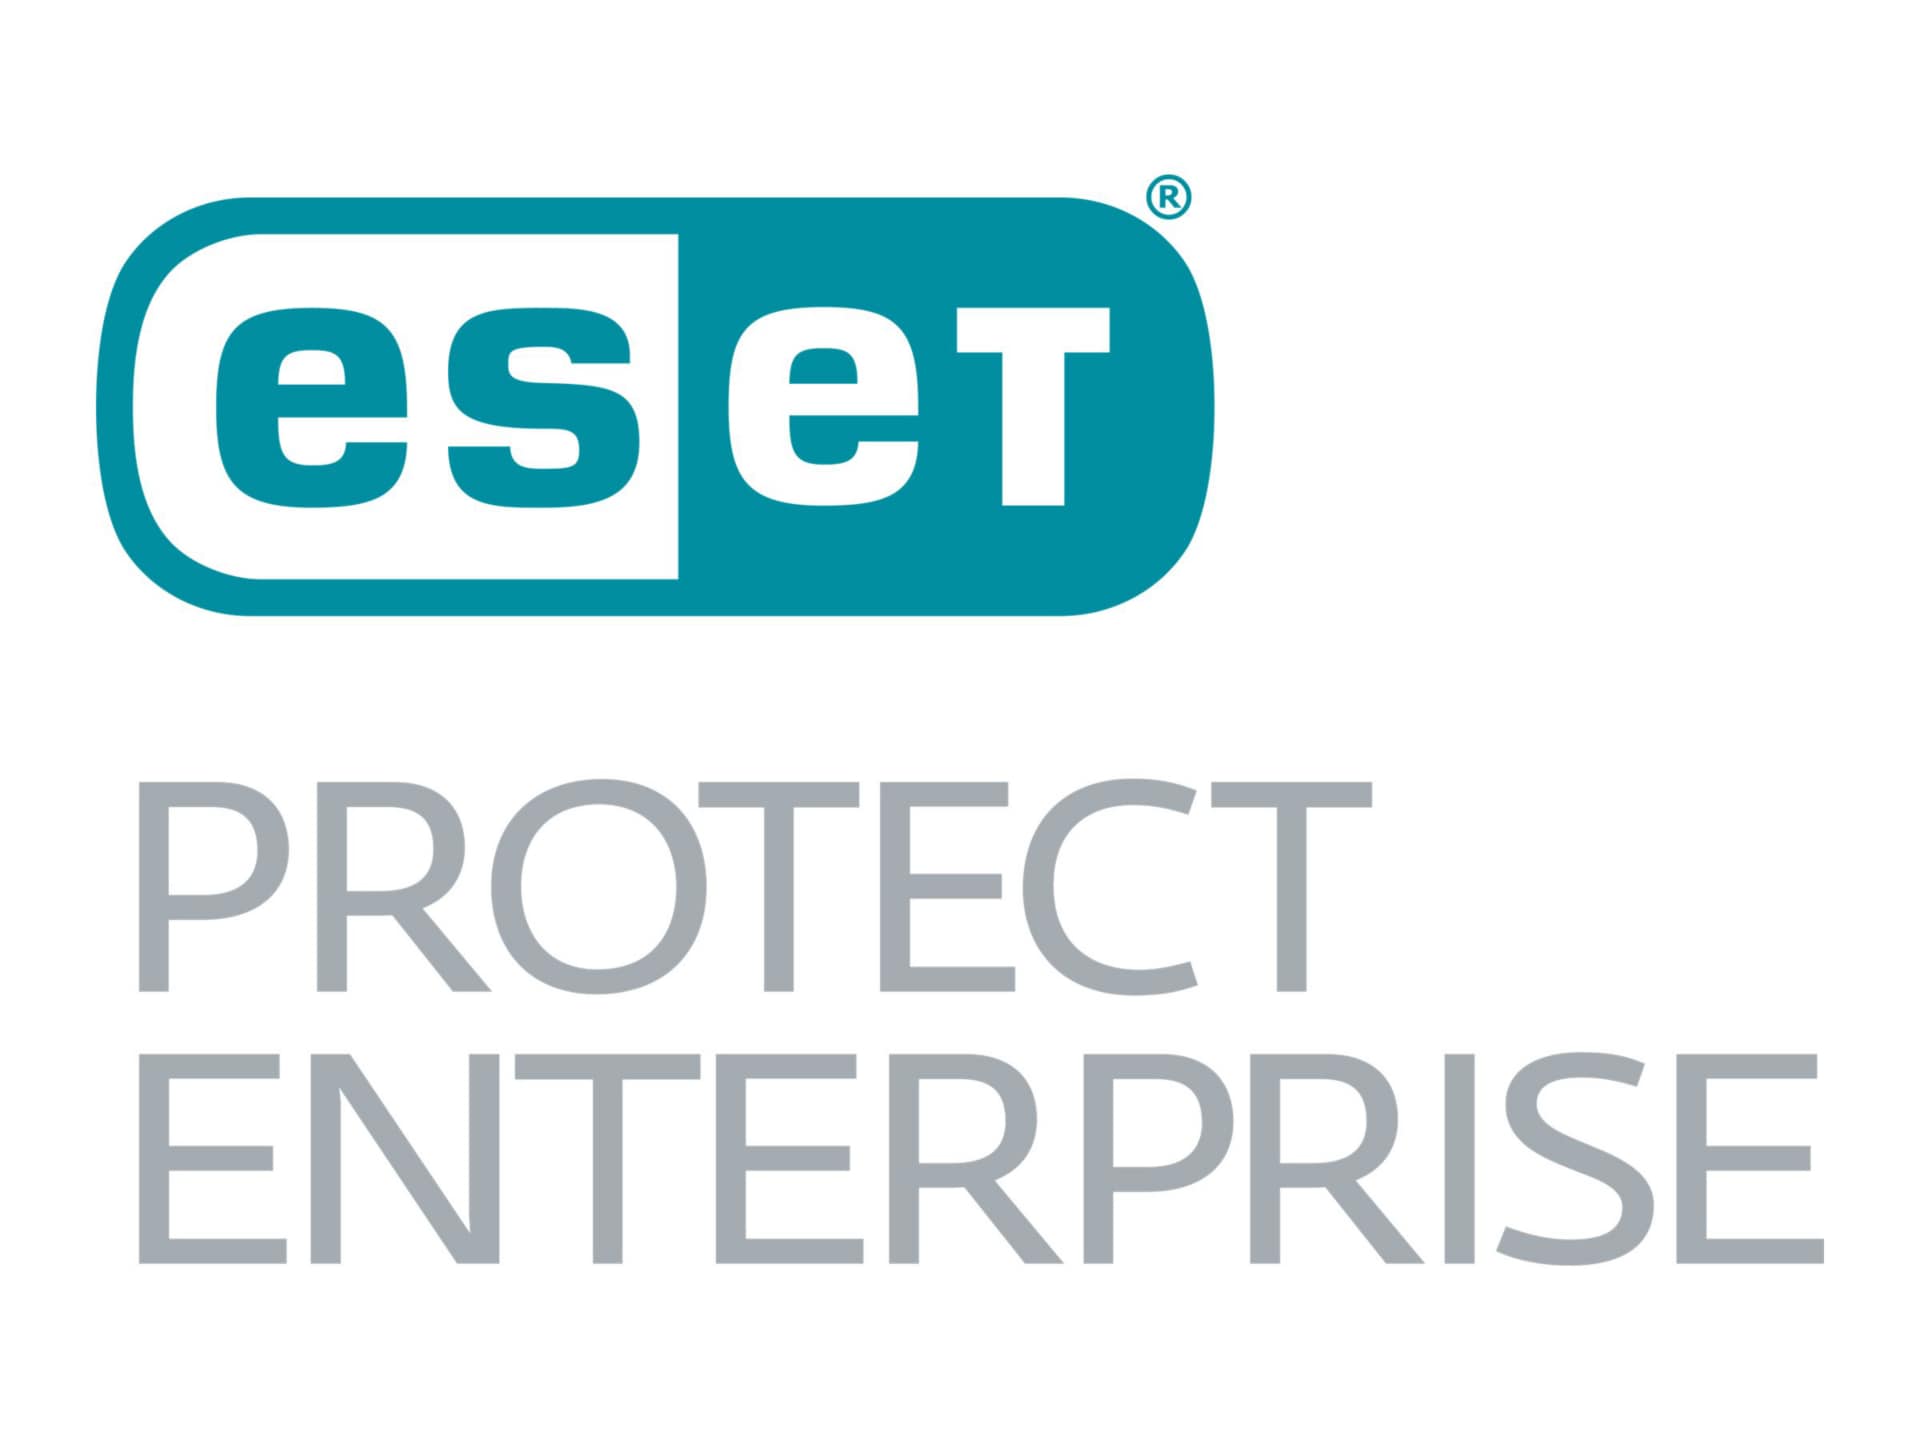 ESET PROTECT Enterprise - subscription license renewal (1 year) - 1 seat